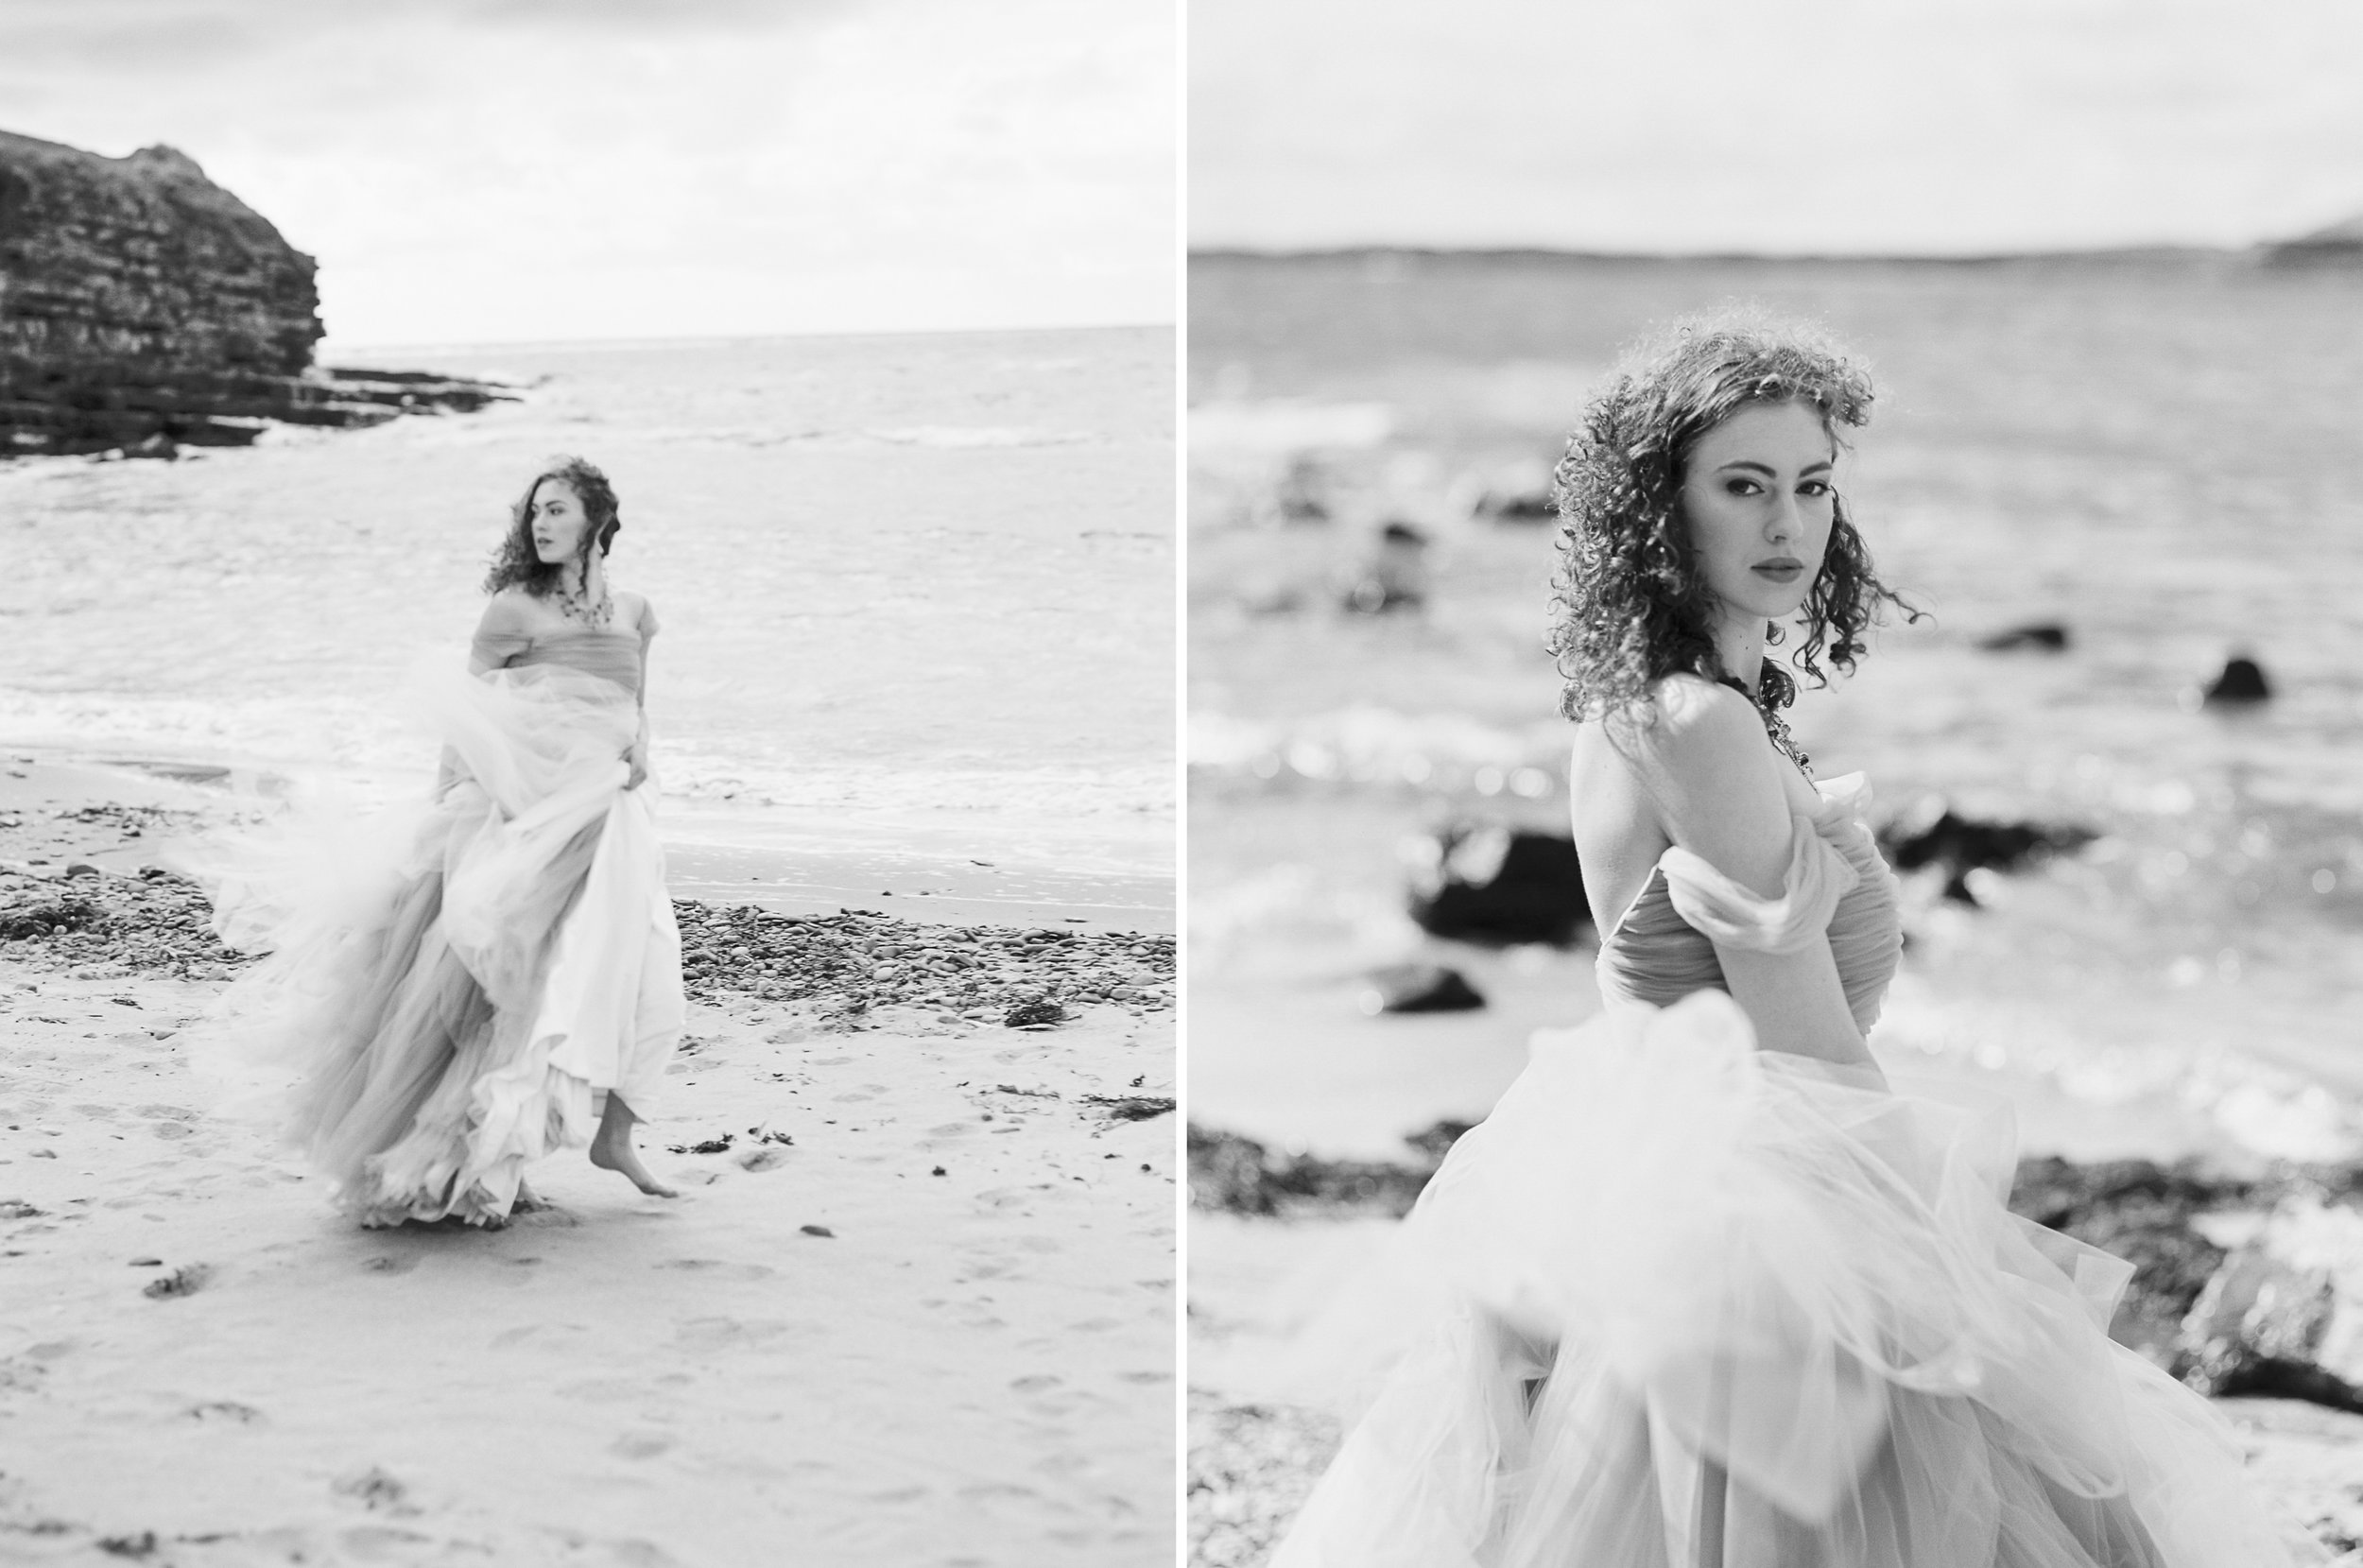 Chen-Sands-Film-Photography-Portraits-Bride-Beauty-Ireland-Diptych-6.jpg